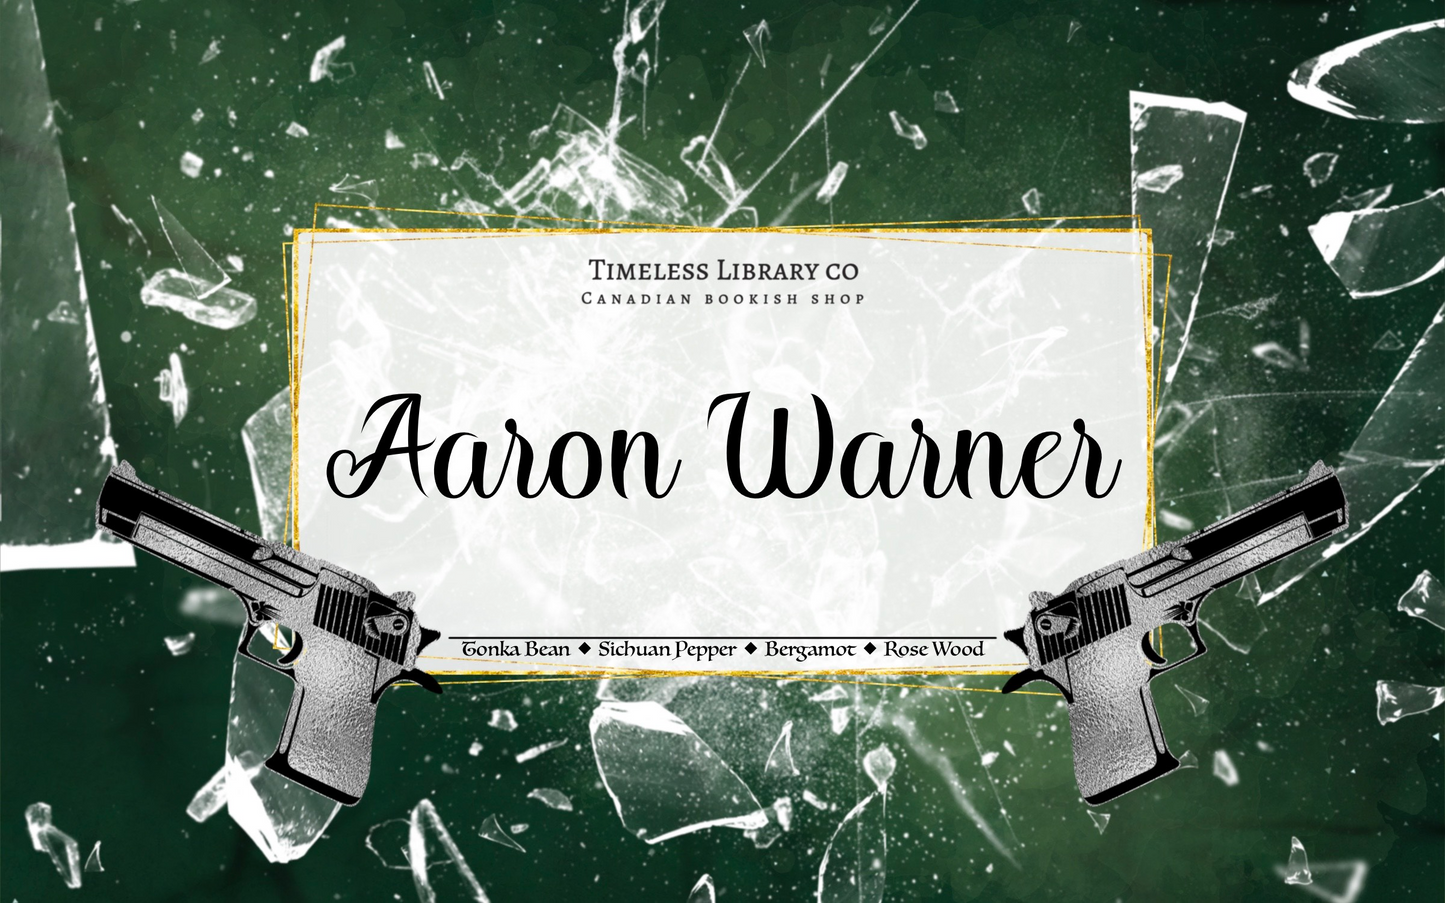 Aaron Warner